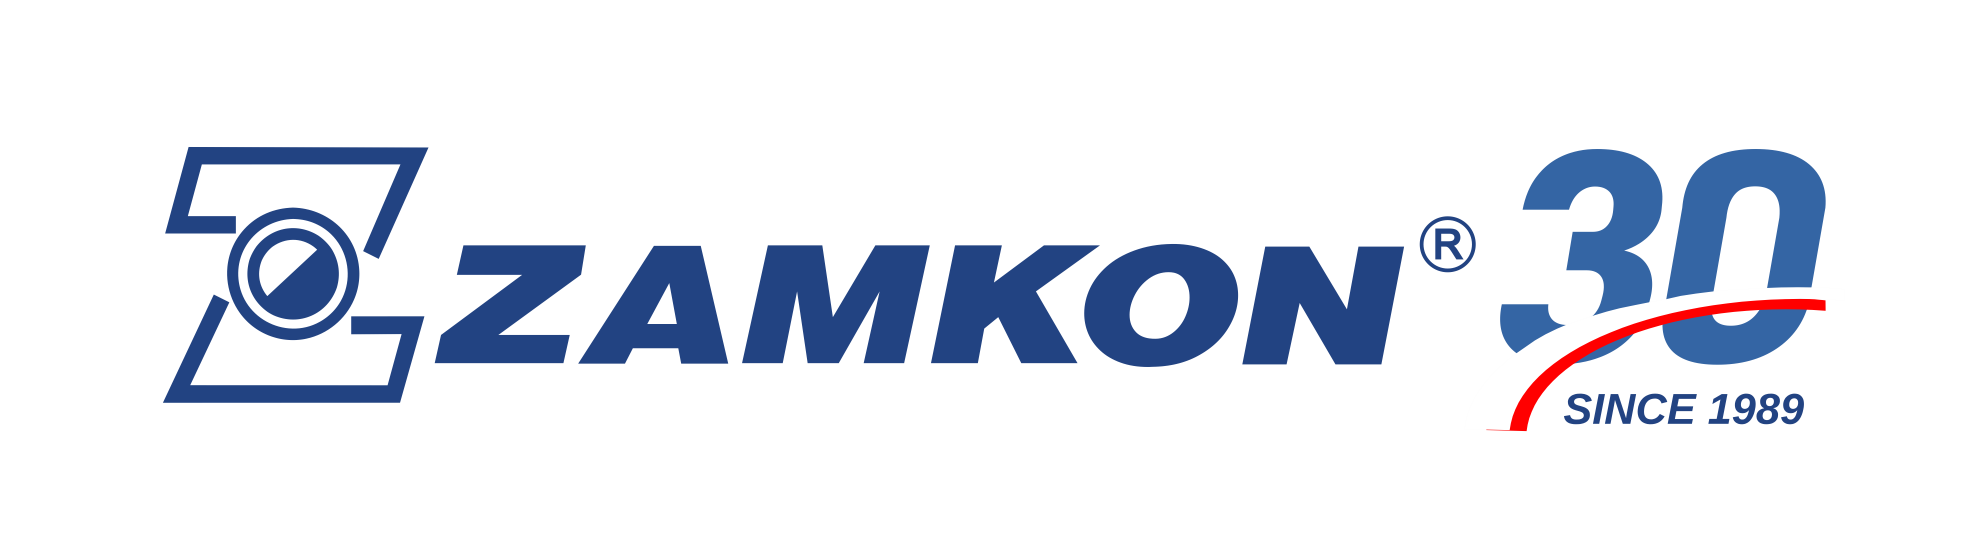 Zamkon Logo